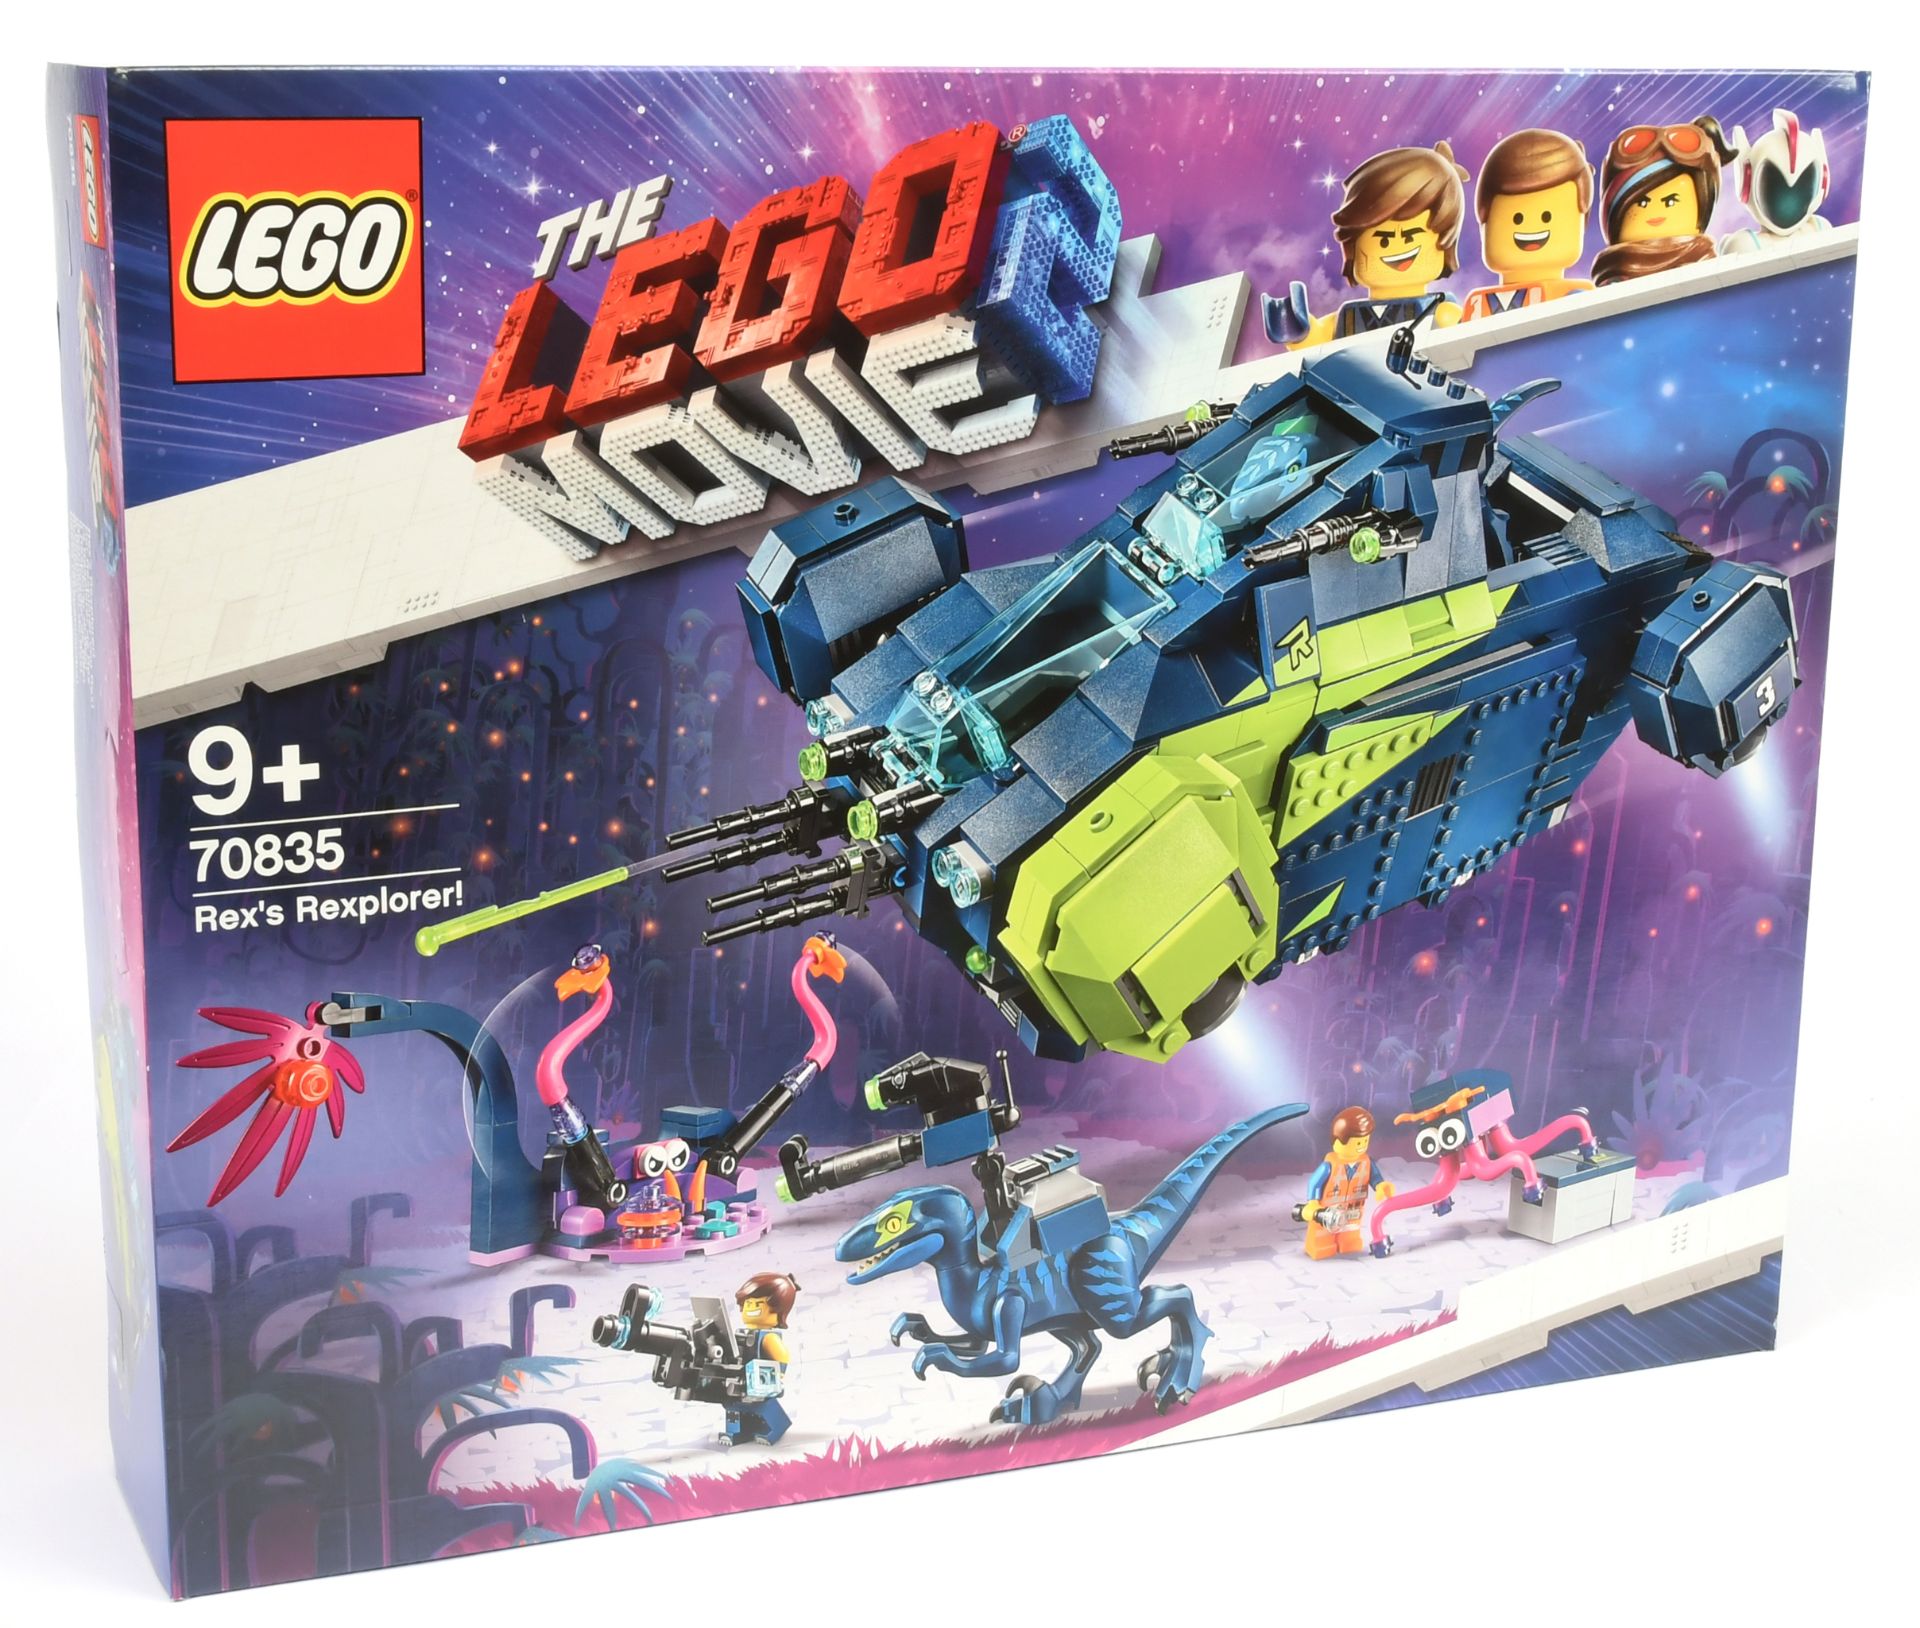 Lego Movie 2 Rex's Rexplorer! set number 70835